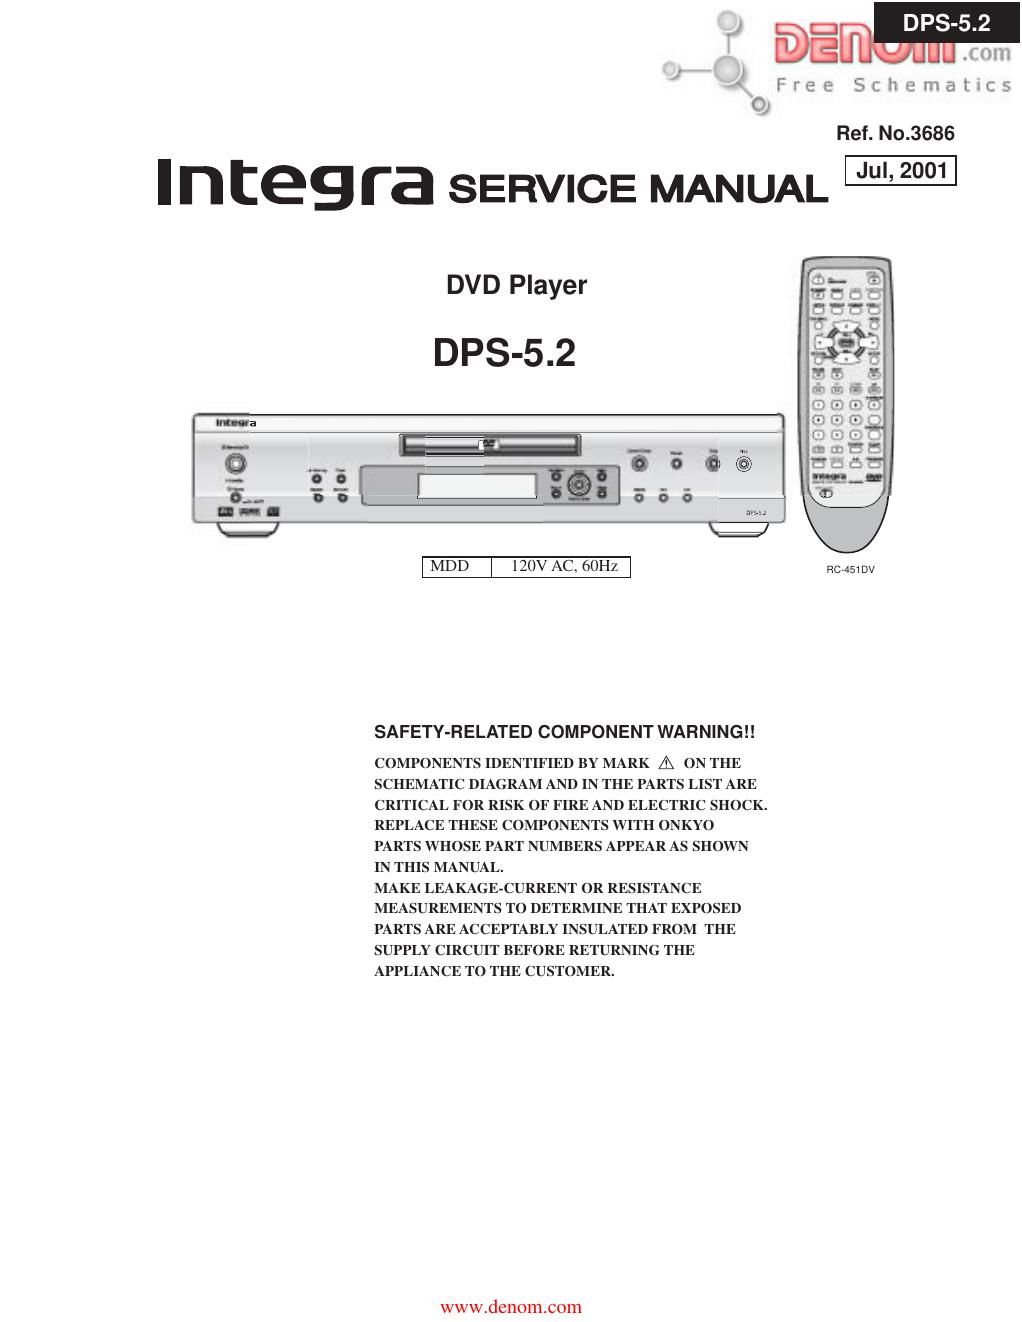 integra dps 5 2 service manual